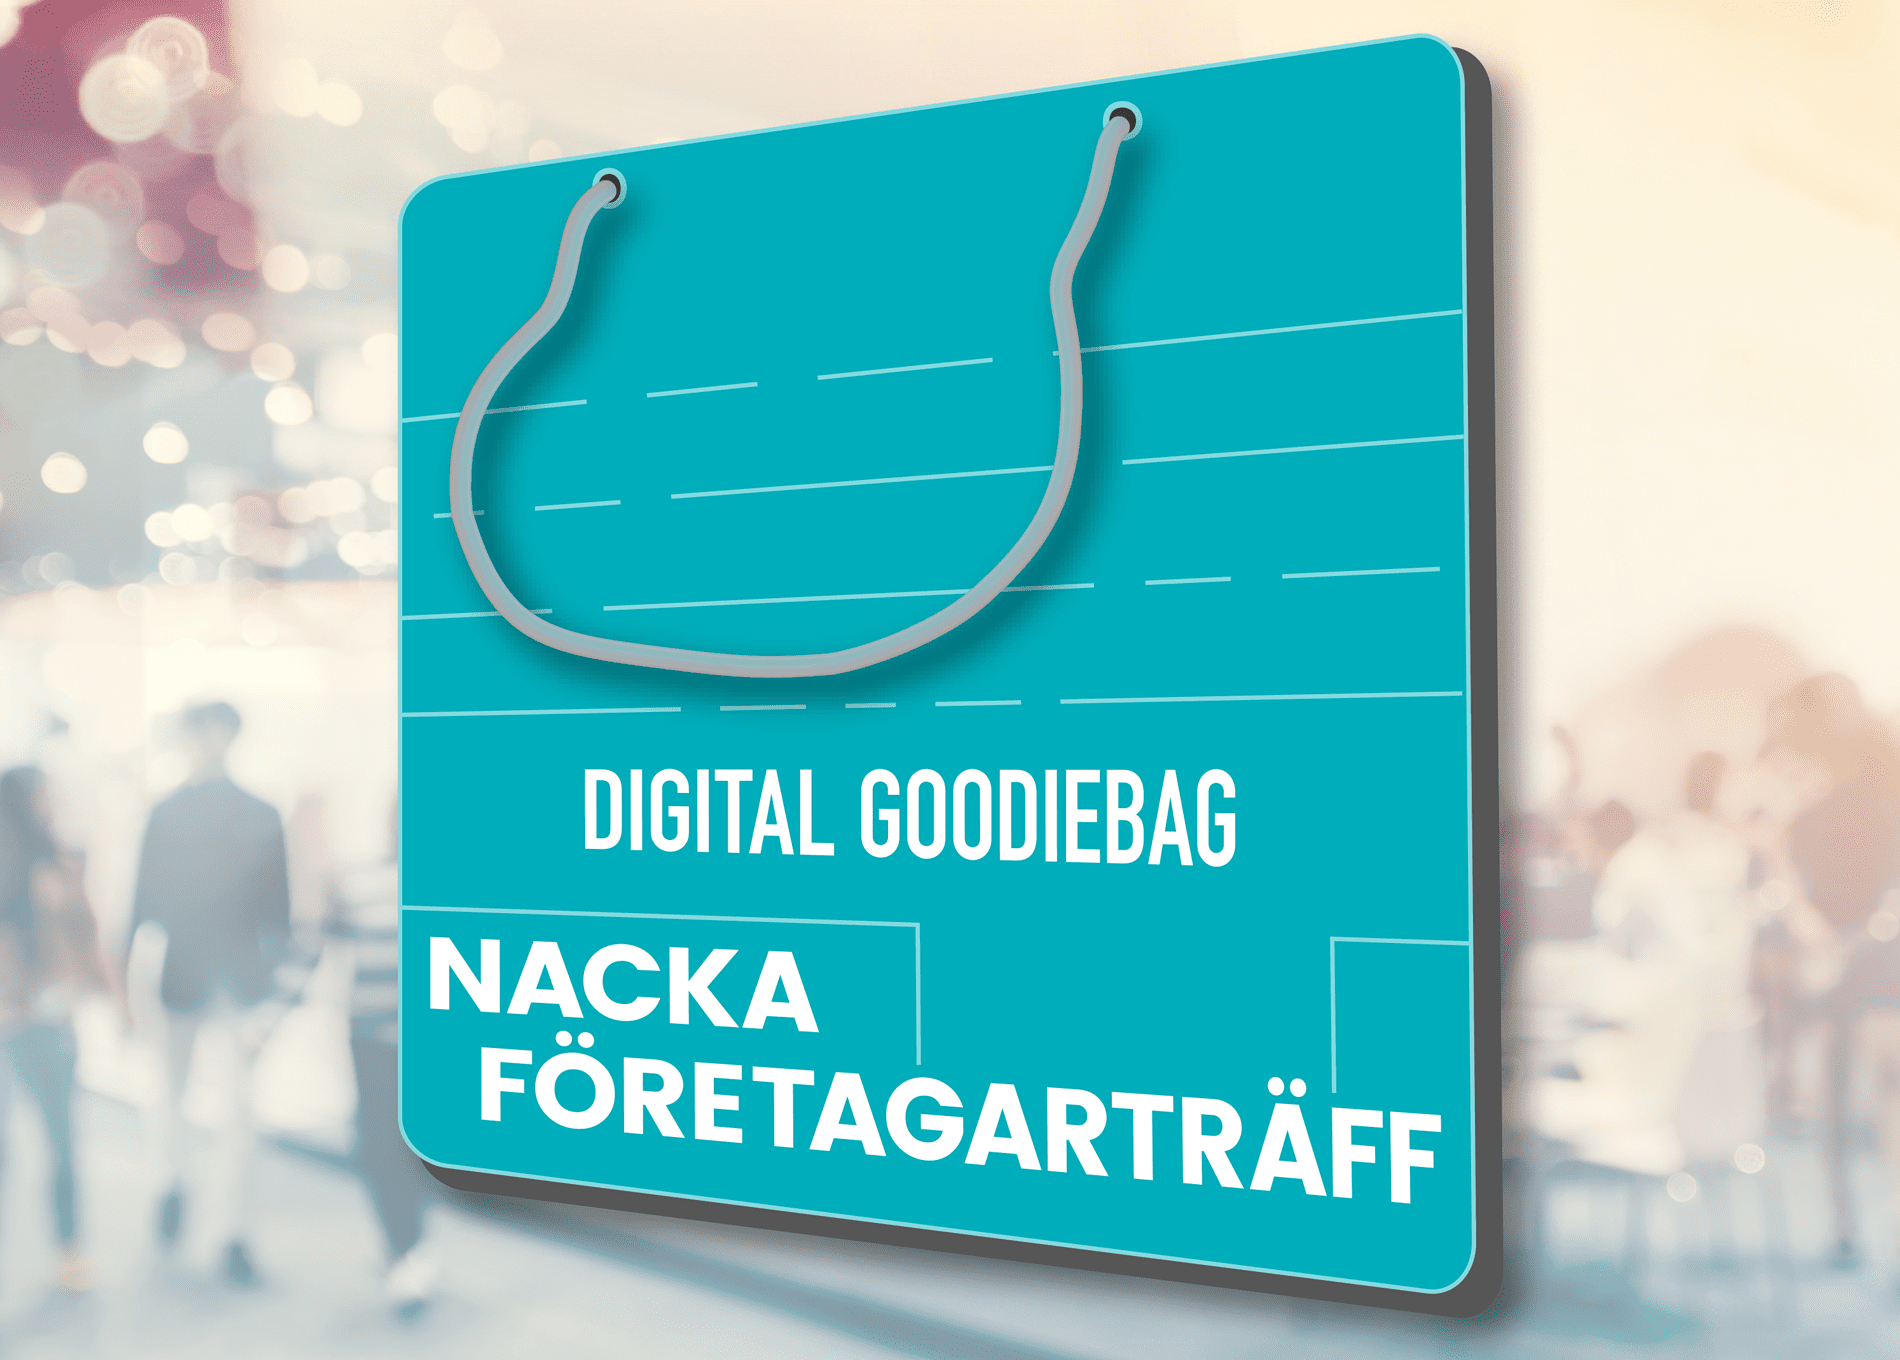 Digital goodiebag Nacka Företagarträff